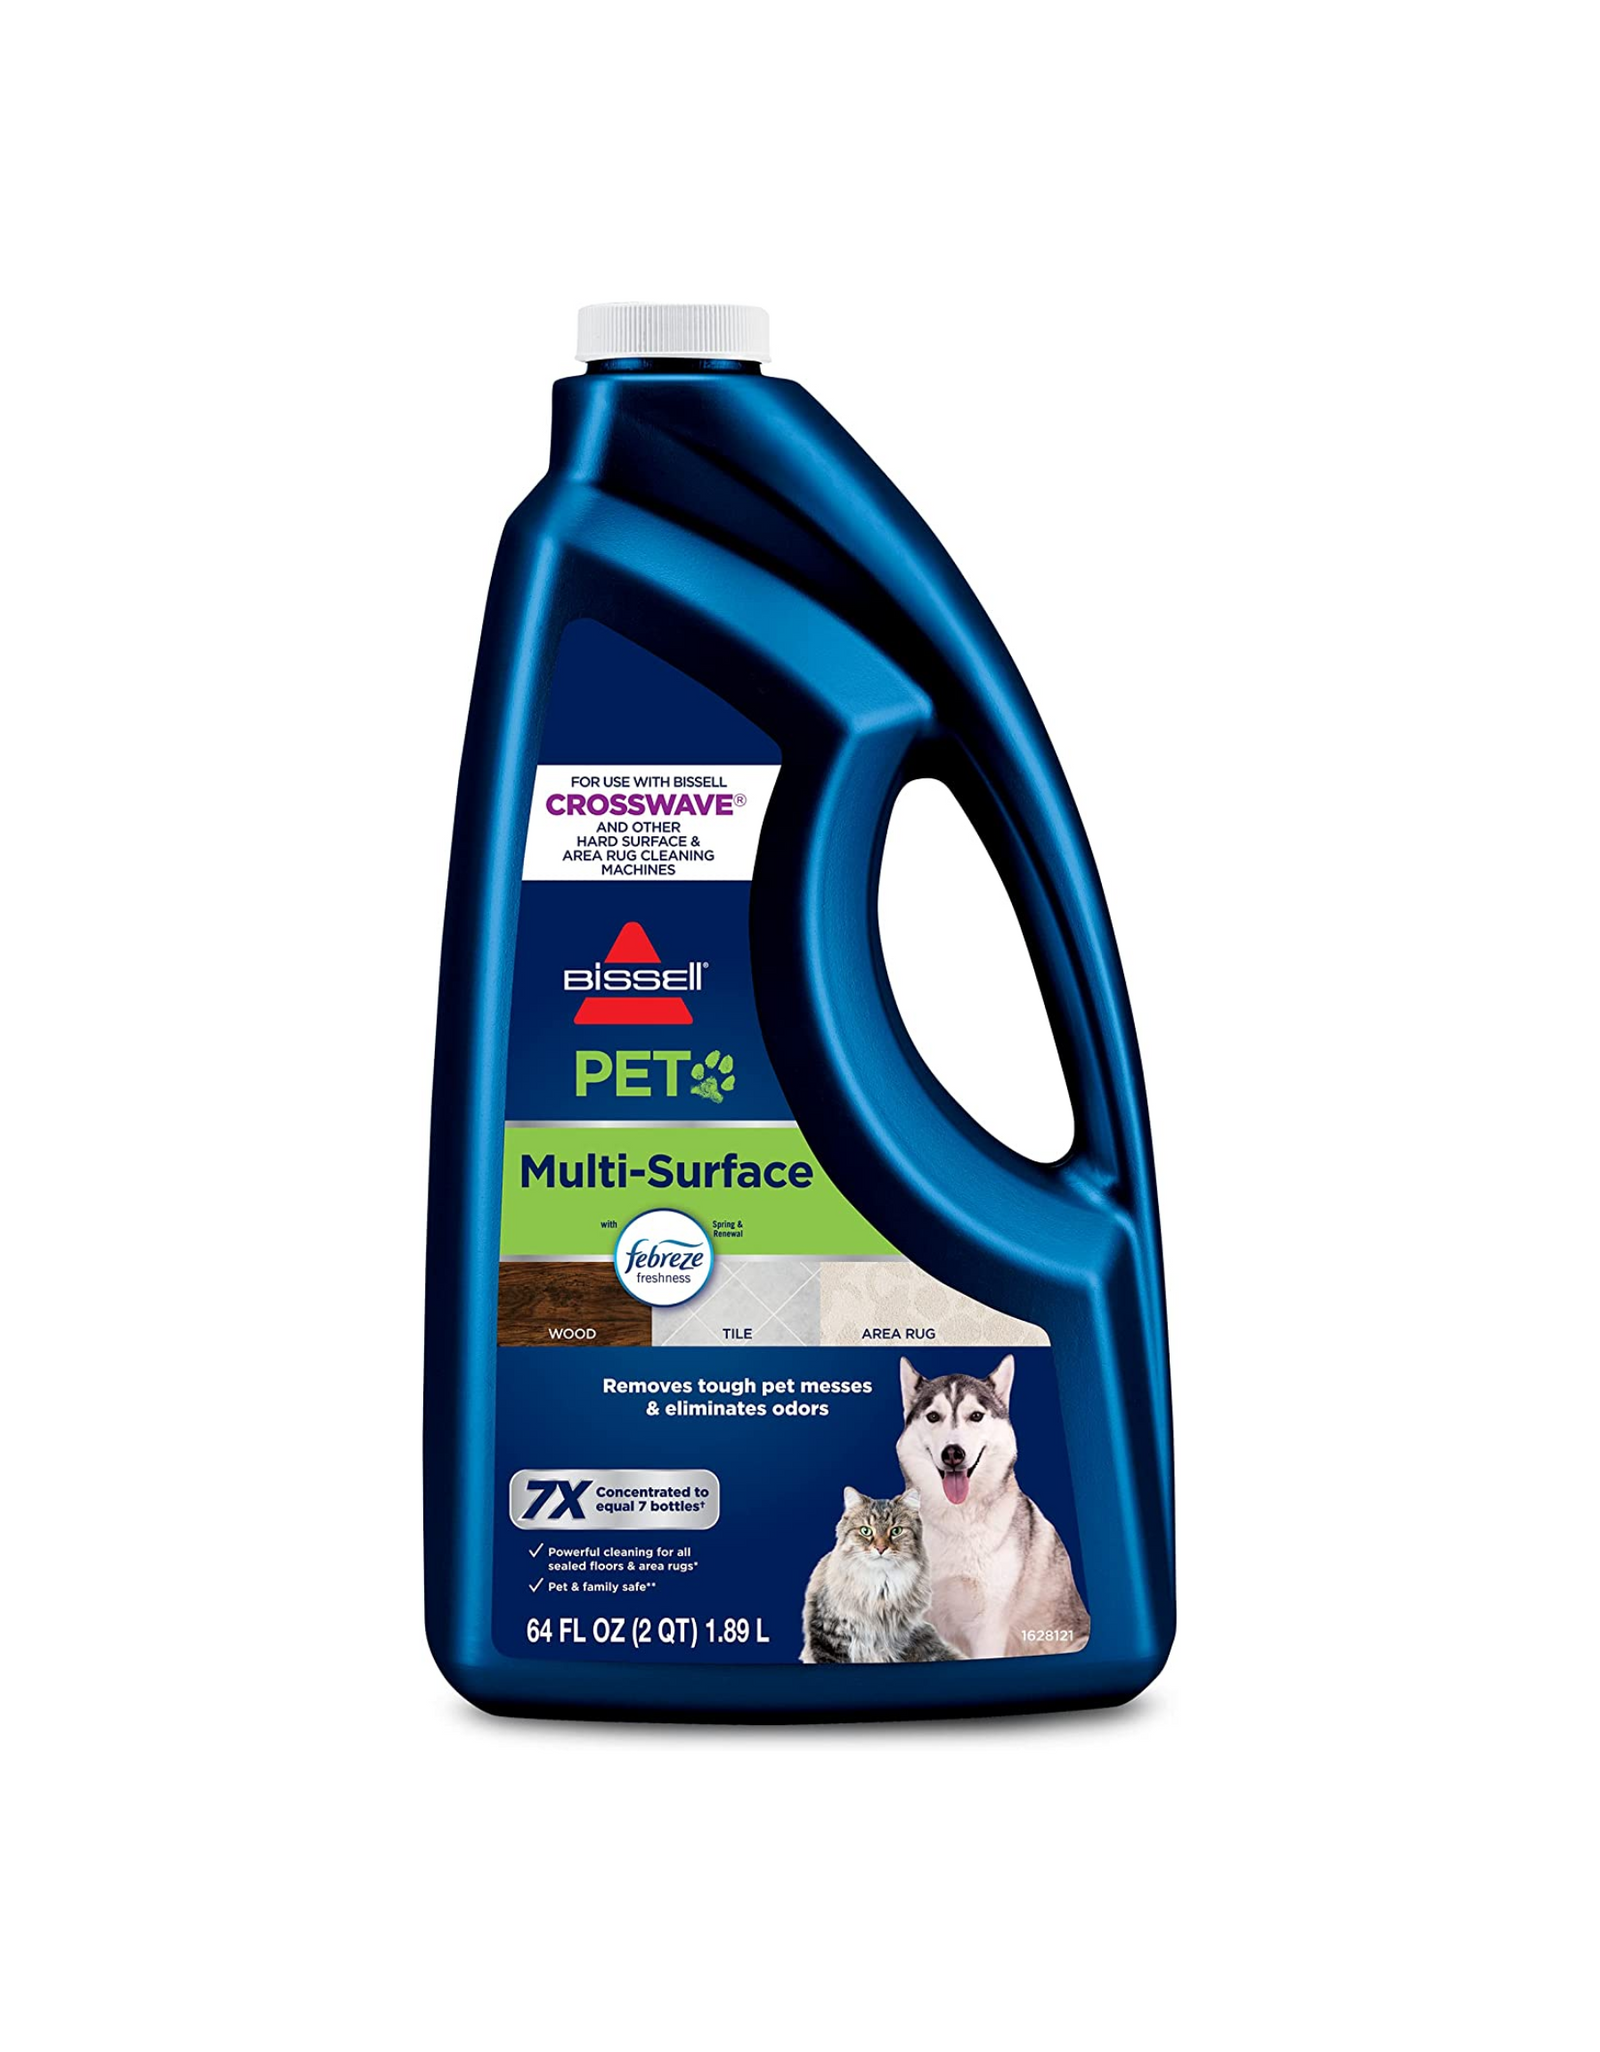 BISSELL Pet Multi-Surface Febreze Freshness (22951), Removes Tough Pet Messes & Eliminate Ordors, 64 fl oz